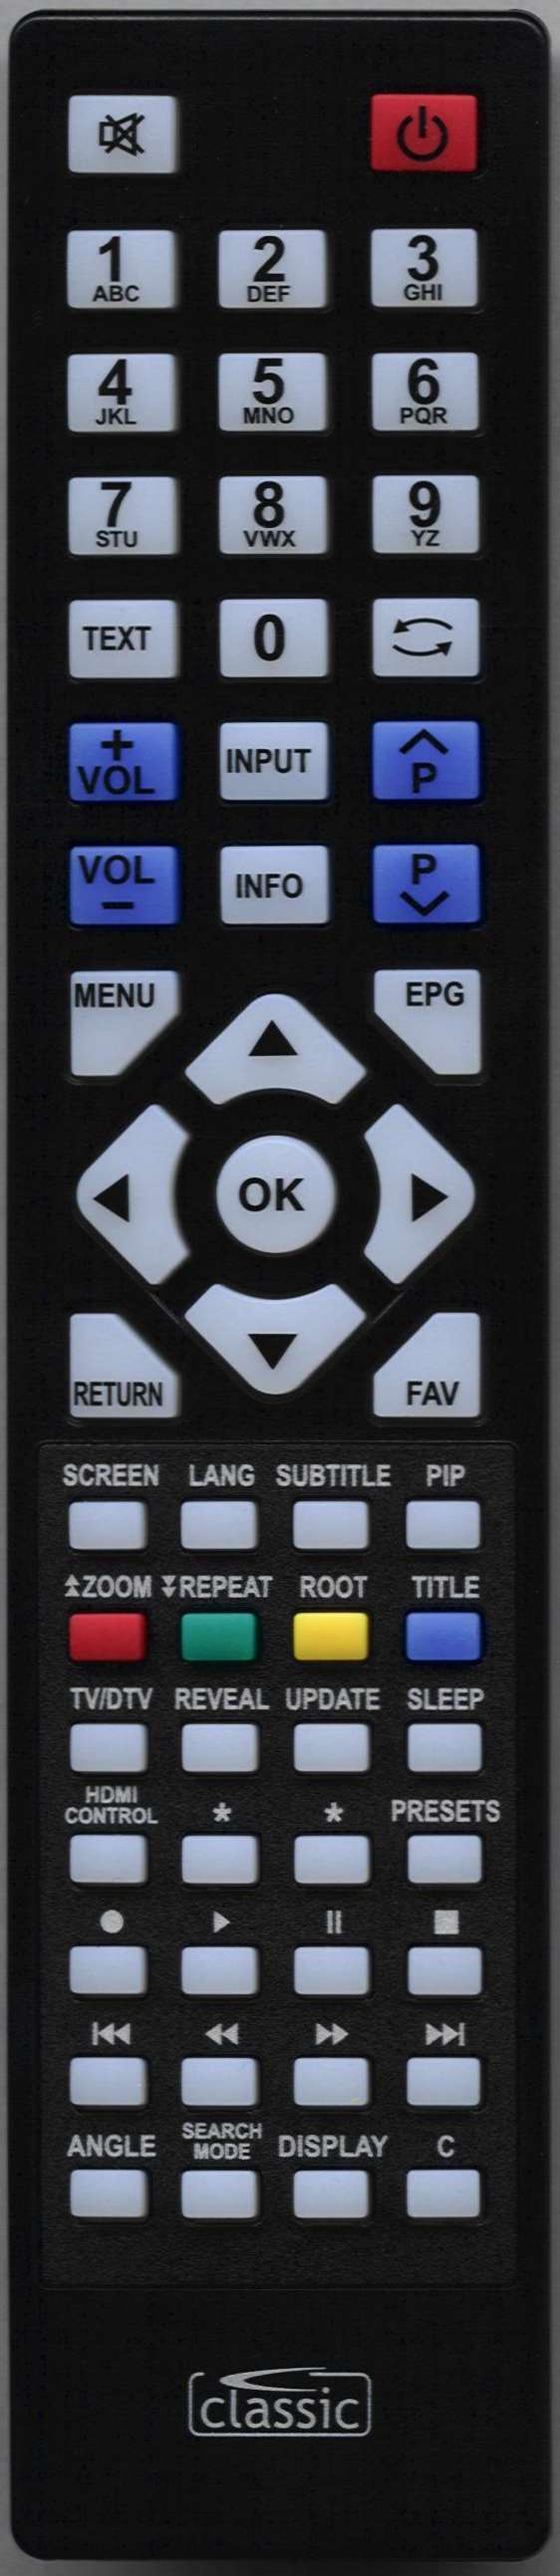 OKI V32B-H Remote Control